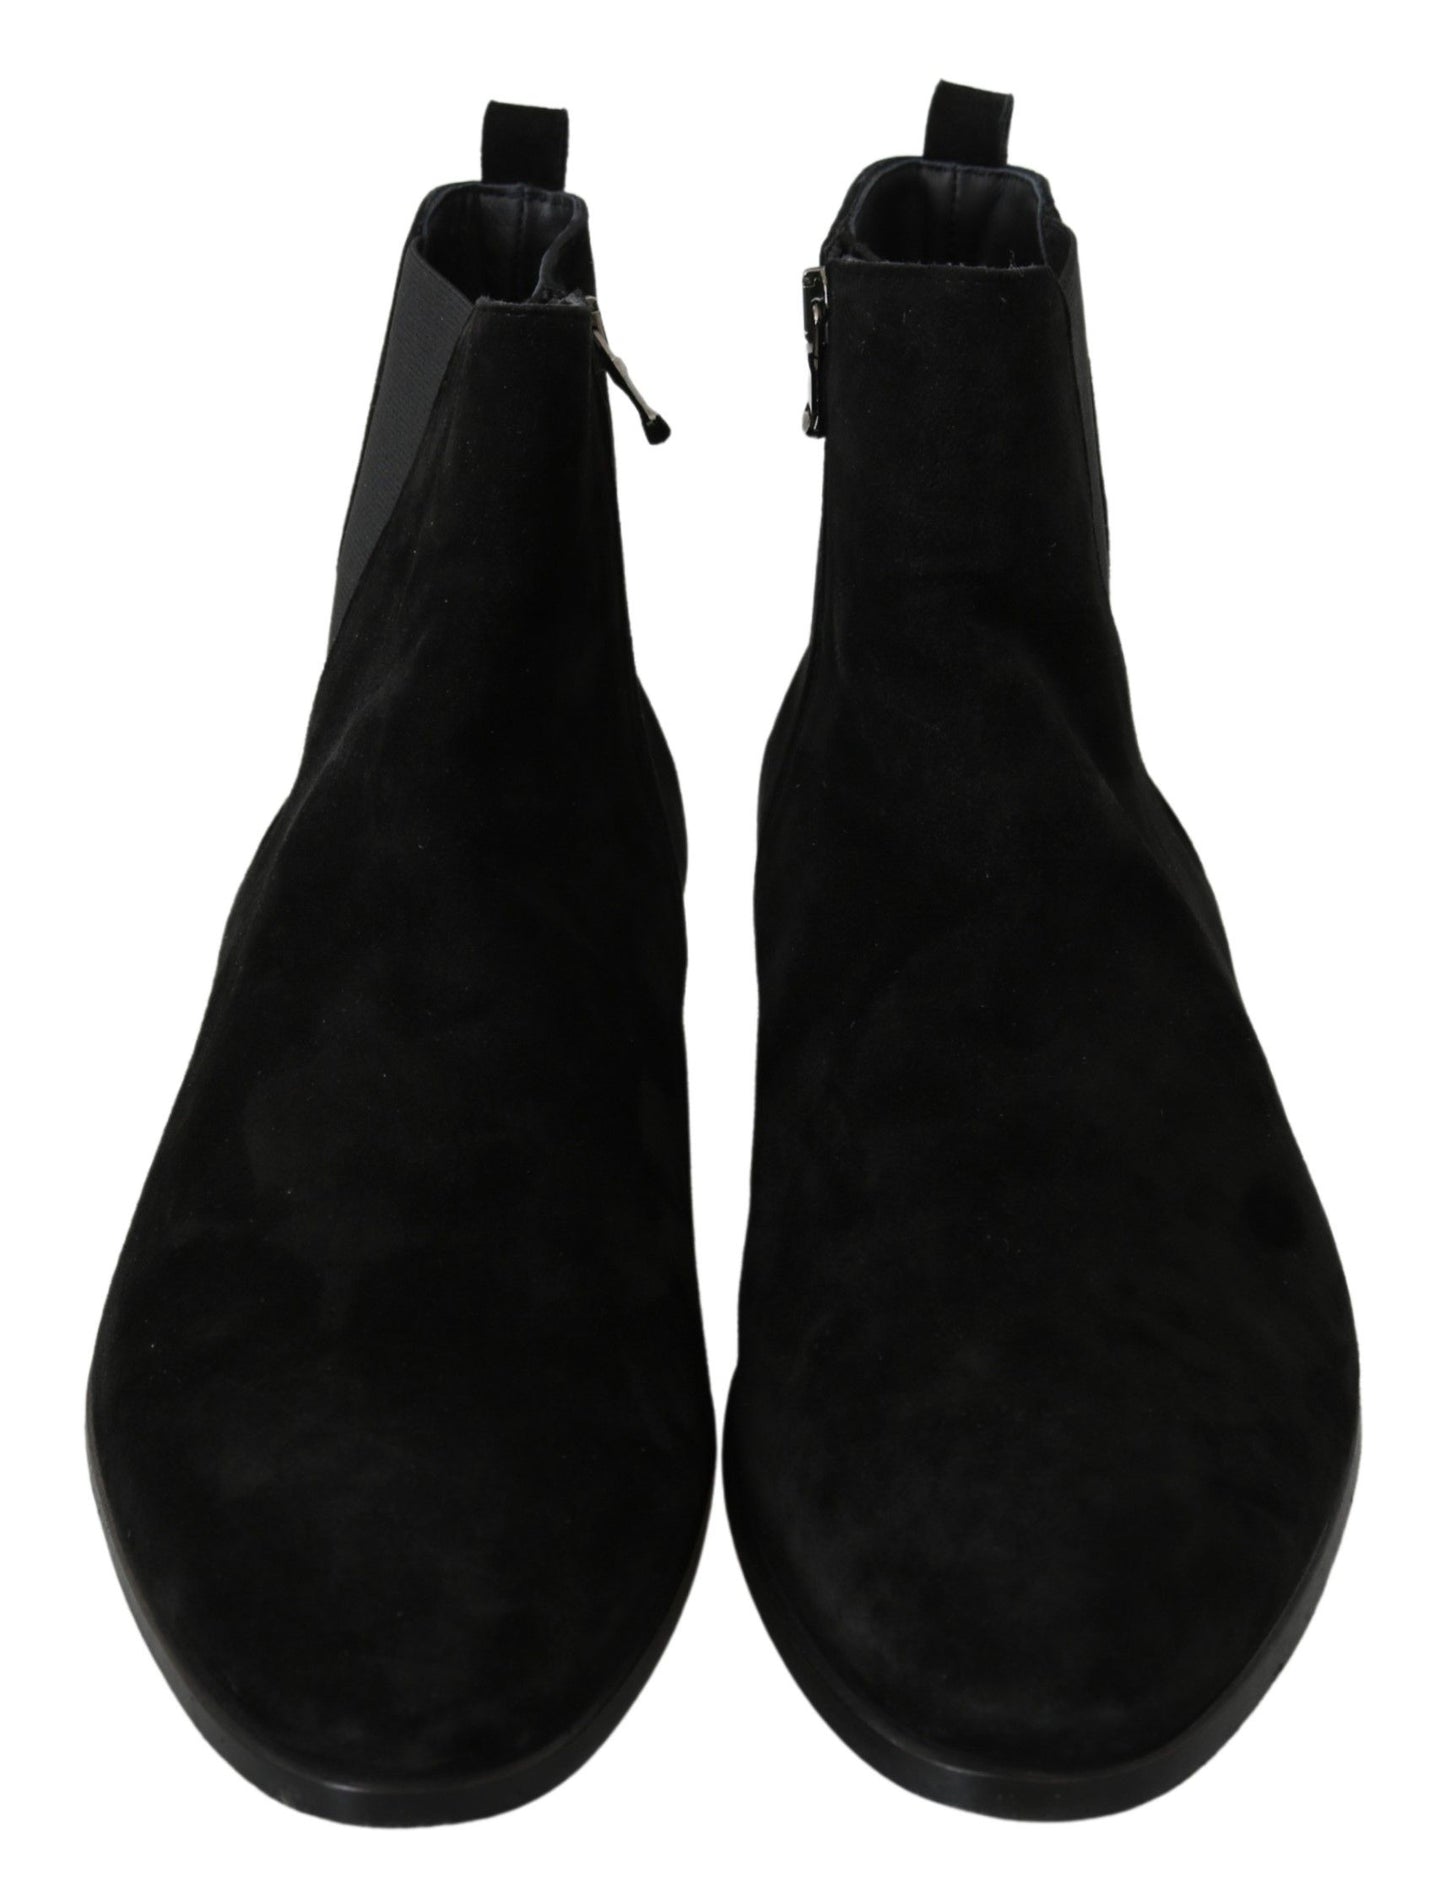 Elegant Black Suede Chelsea Boots